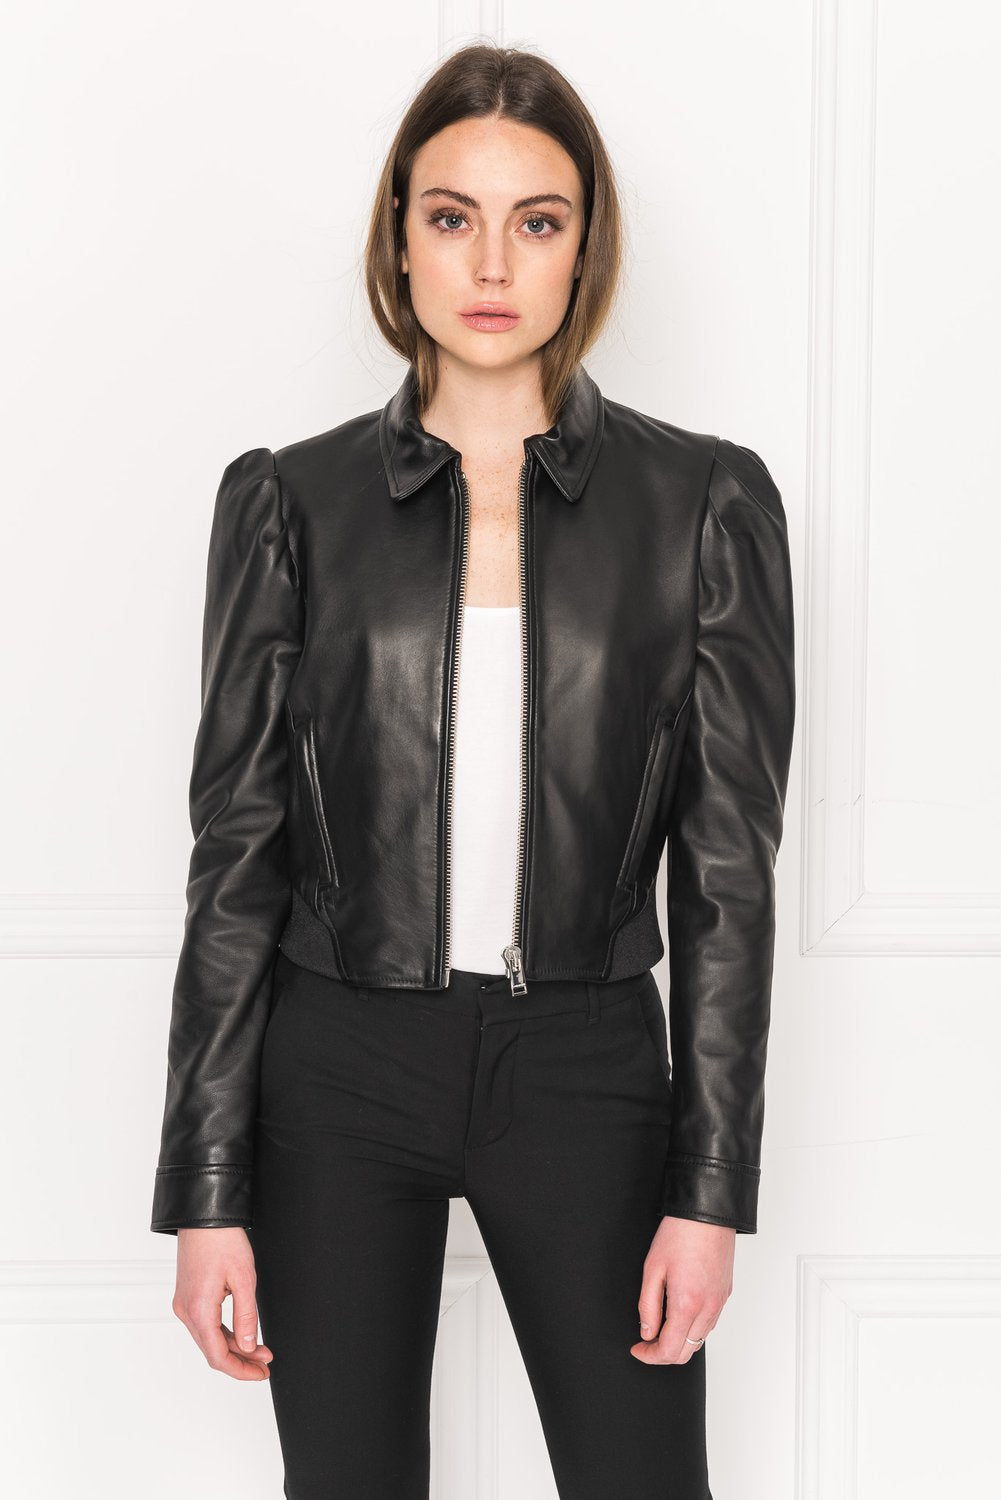 Lamarque - Ursula Leather Jacket in Black